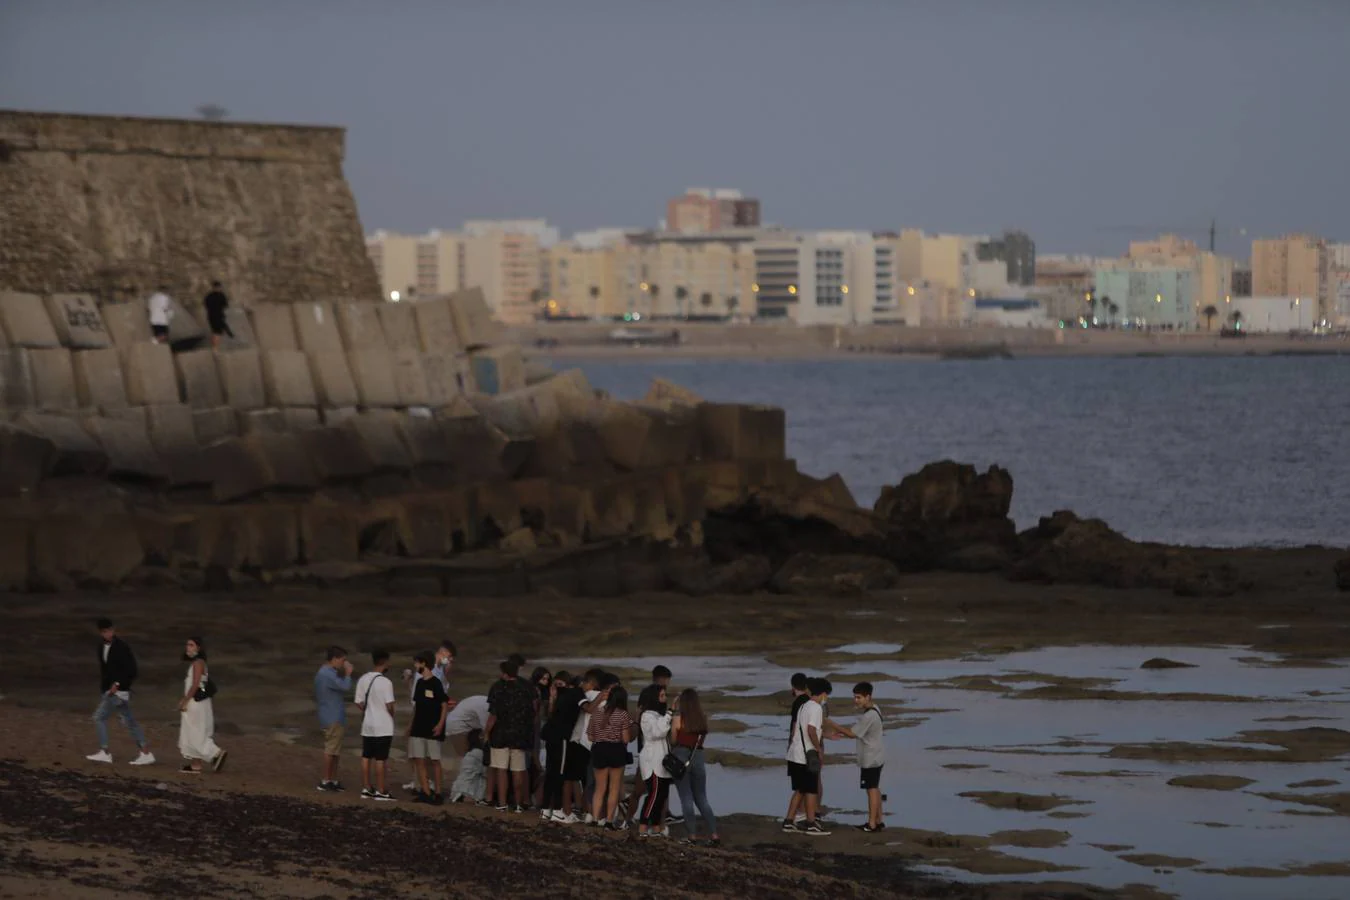 Fotos: Cádiz celebra la Noche de San Juan 2021 con el virus aún latente